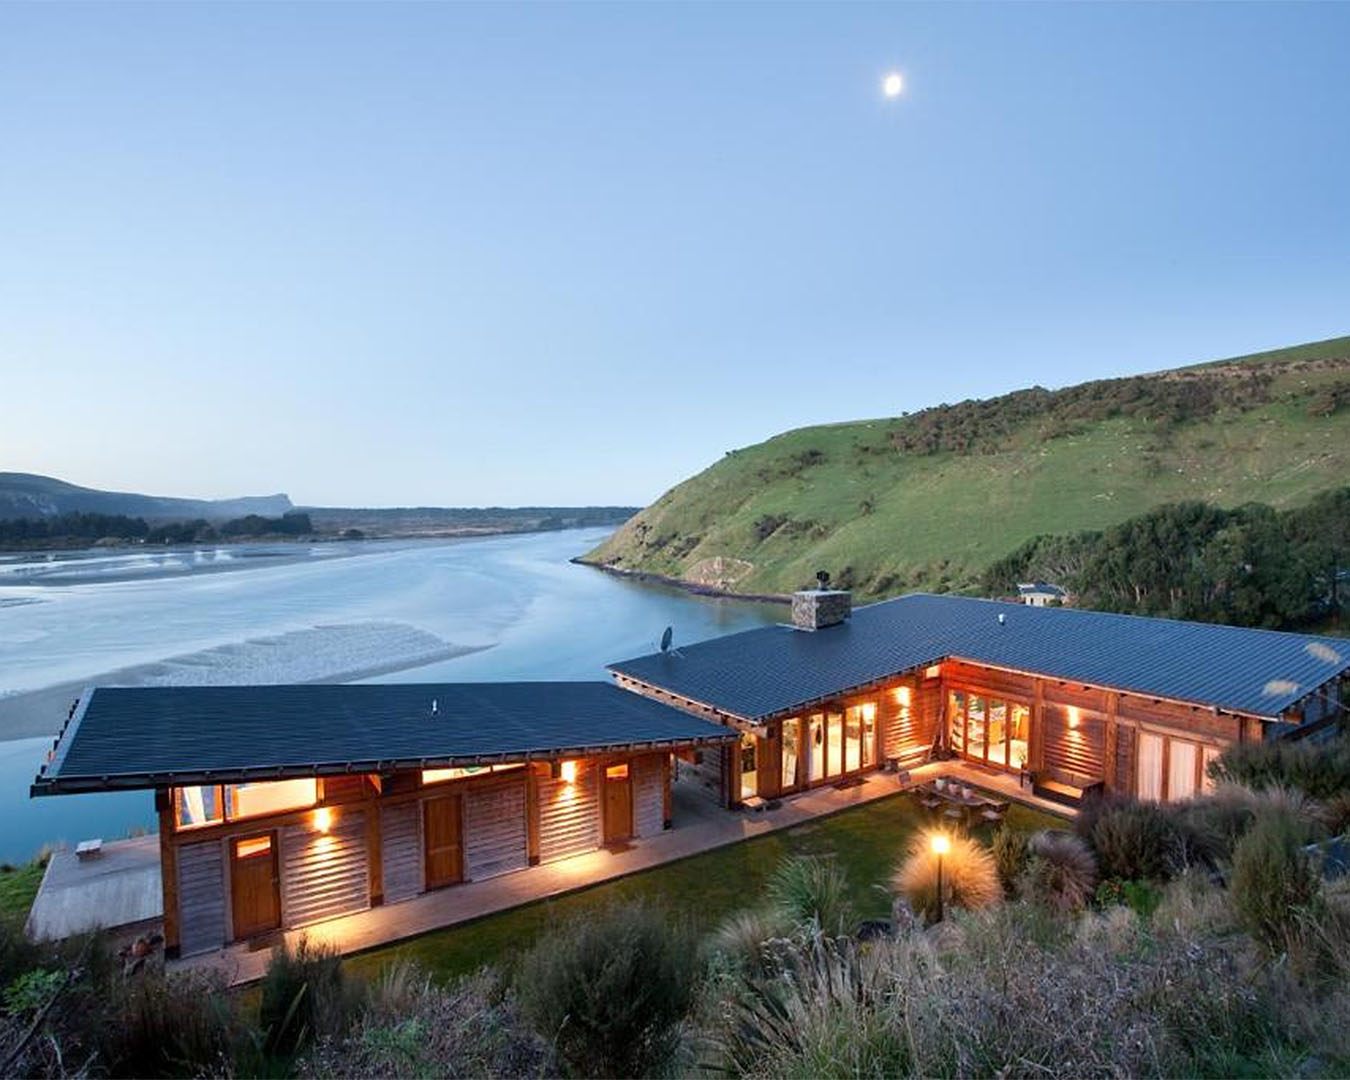 An impressive lodge overlooks the water at dusk in Dunedin.